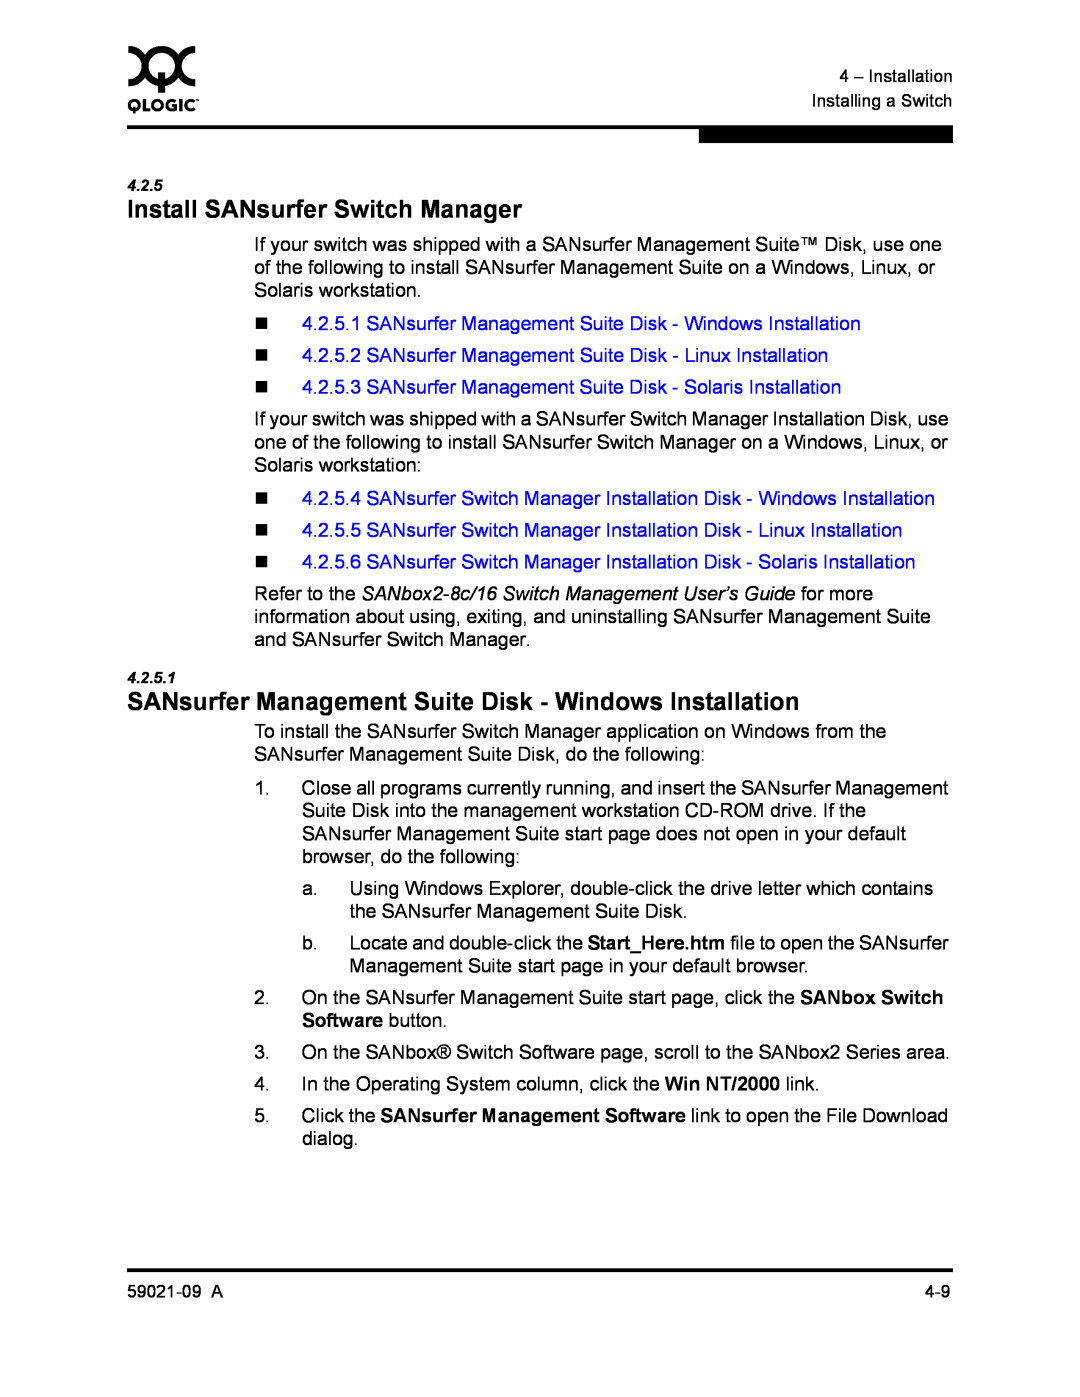 Q-Logic SB2A-16B, QLA2342 manual Install SANsurfer Switch Manager, SANsurfer Management Suite Disk - Windows Installation 